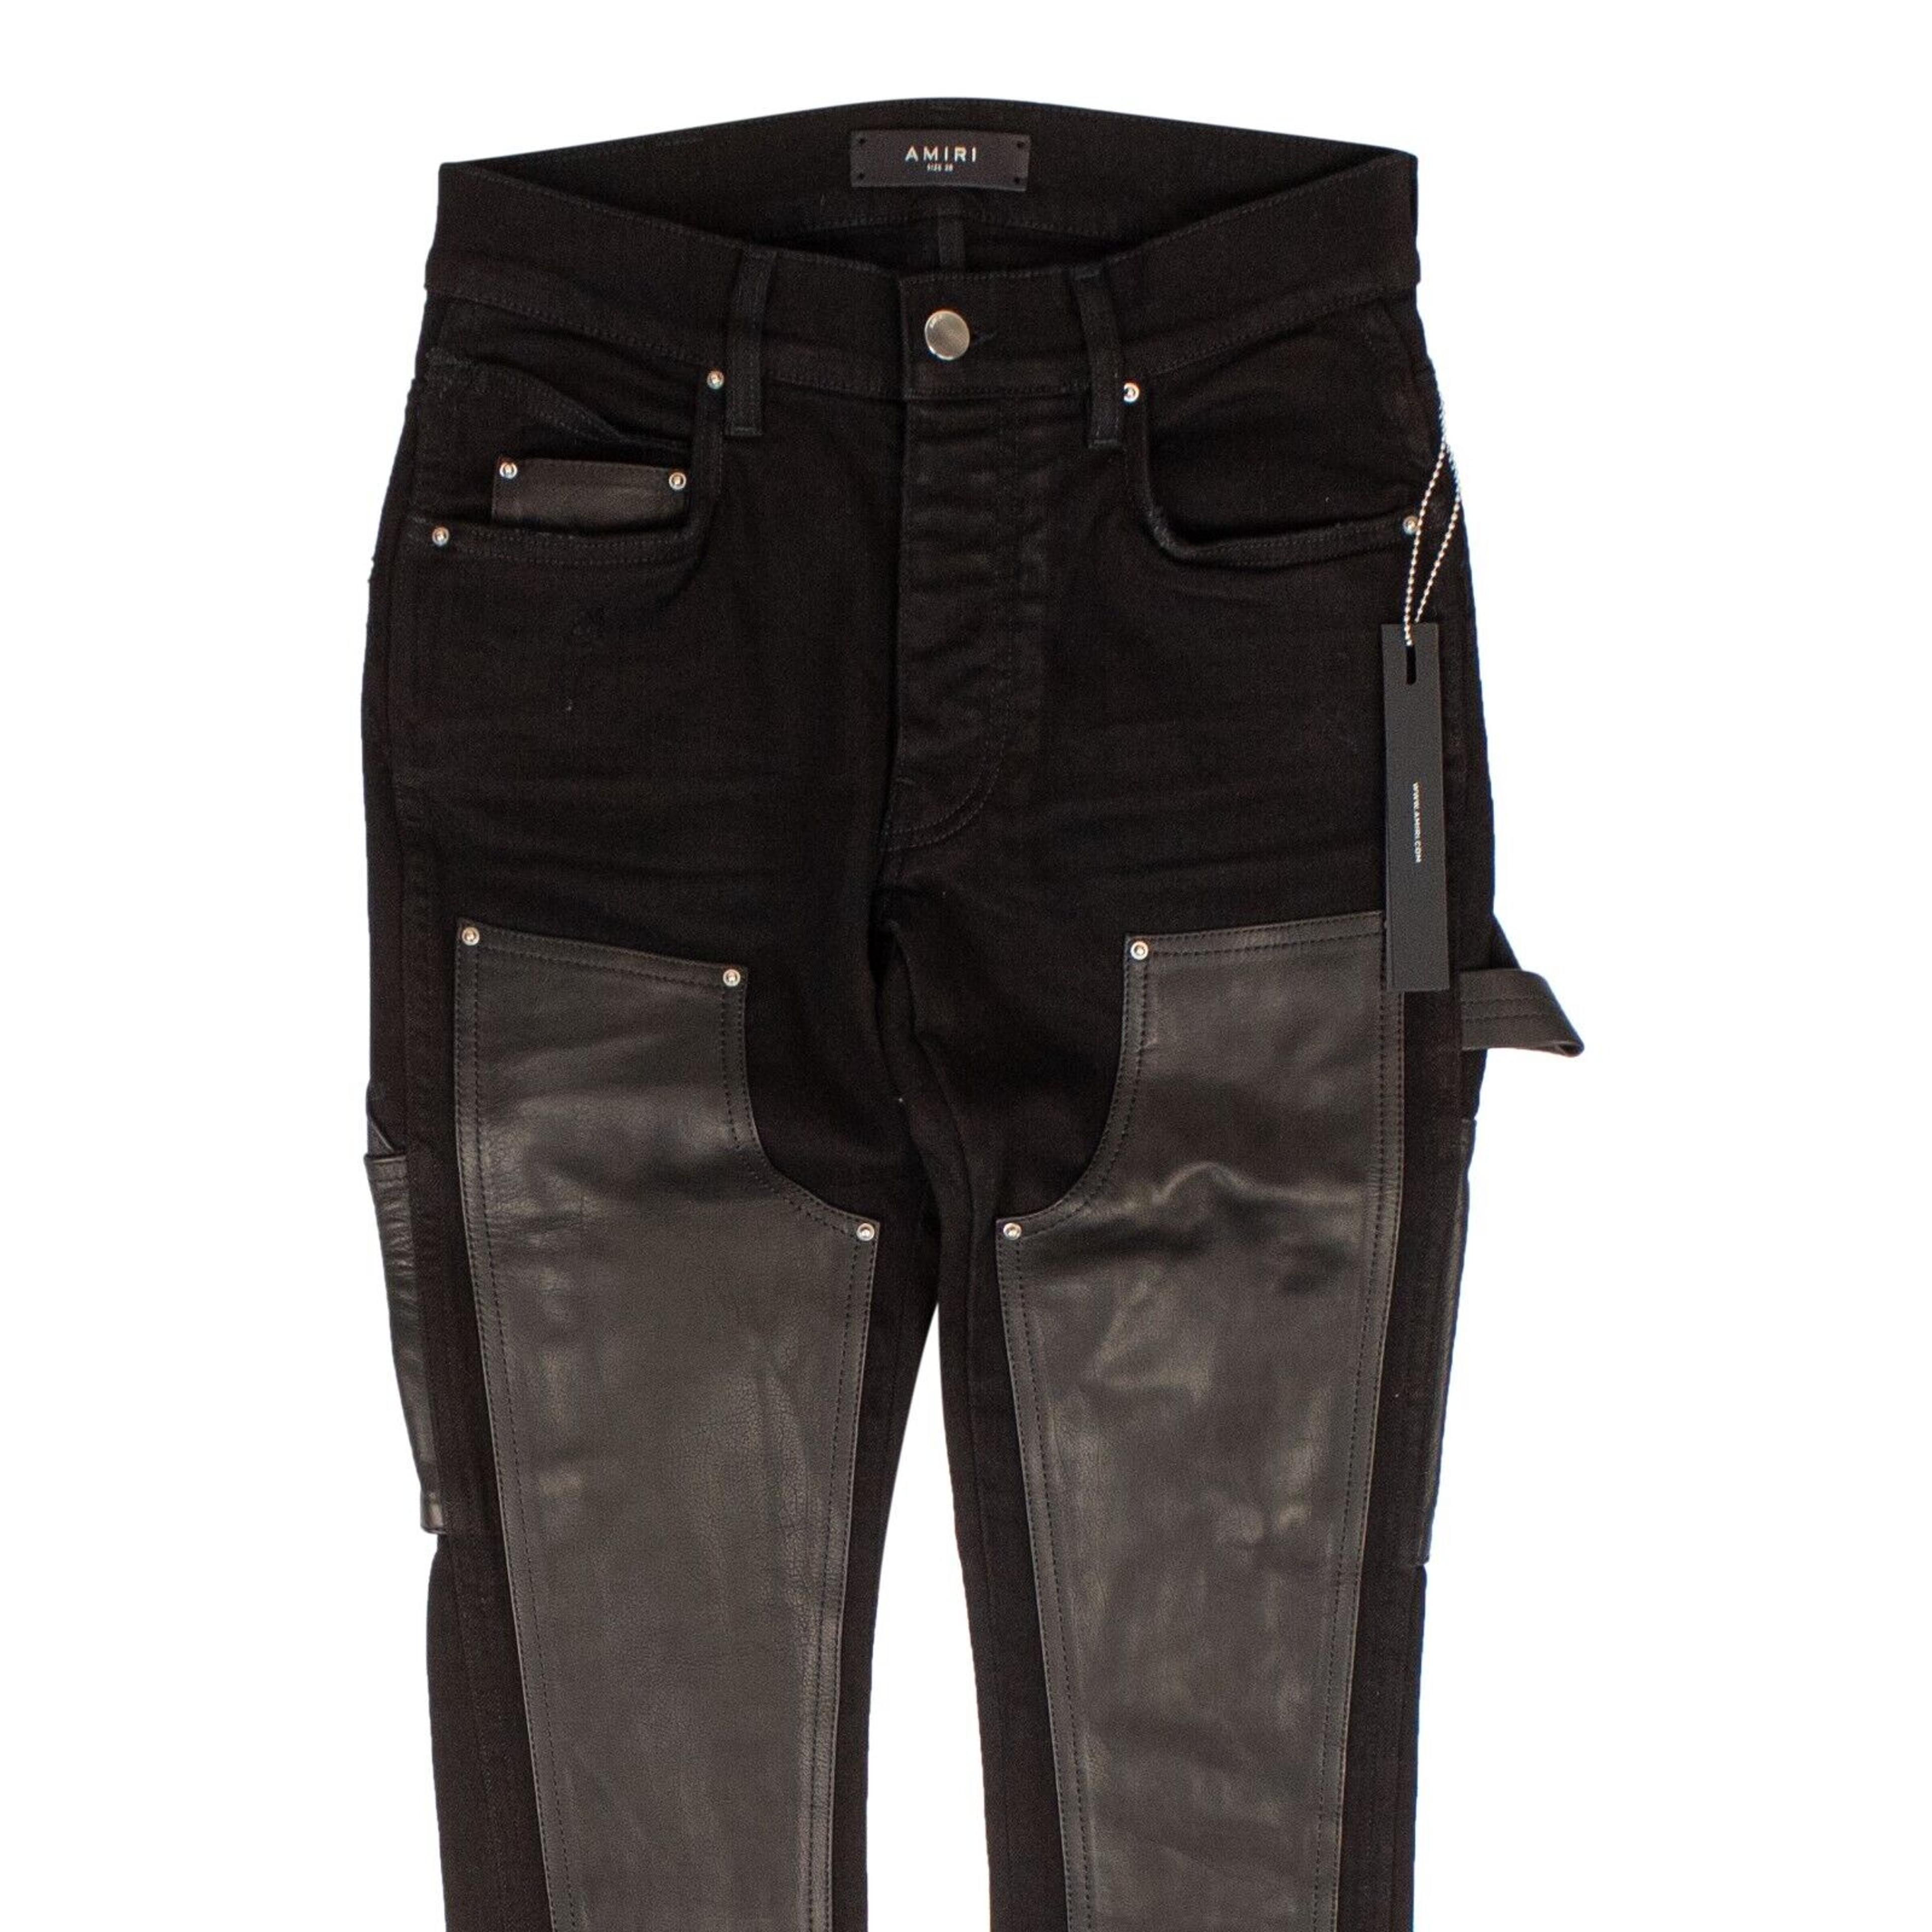 Alternate View 1 of Black Denim Leather Workman Pants